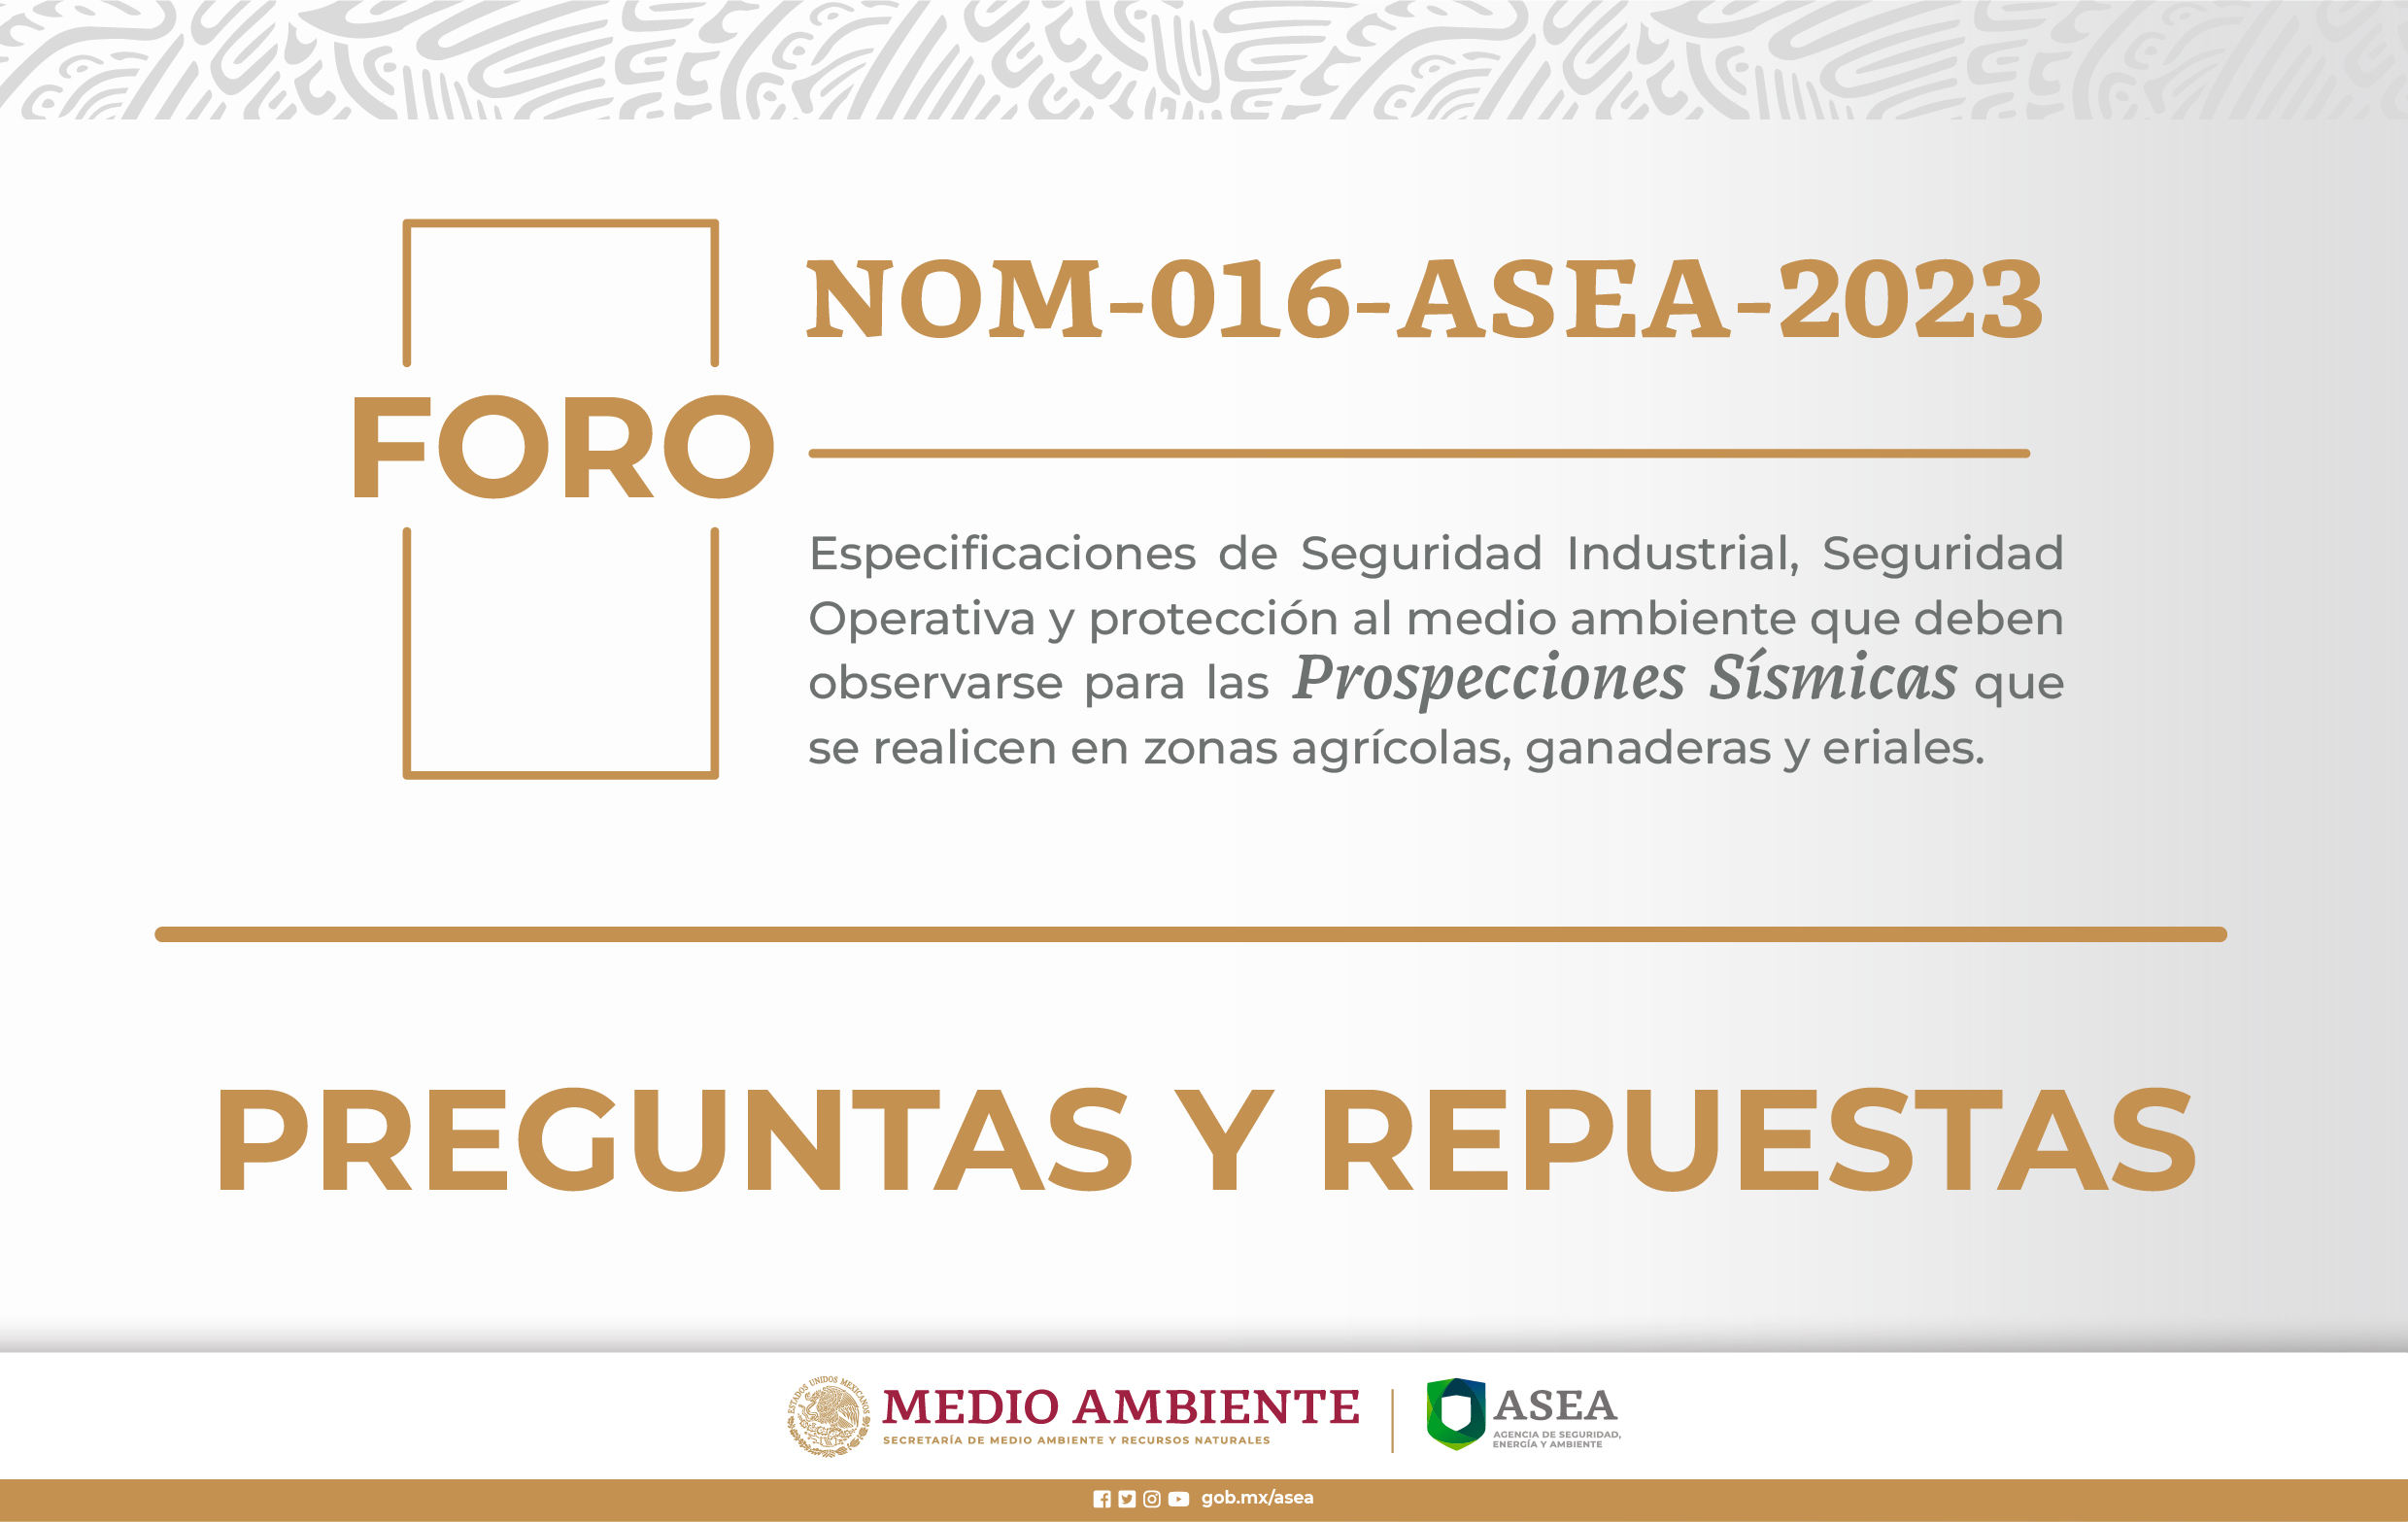 FORO NOM-016-ASEA-2023